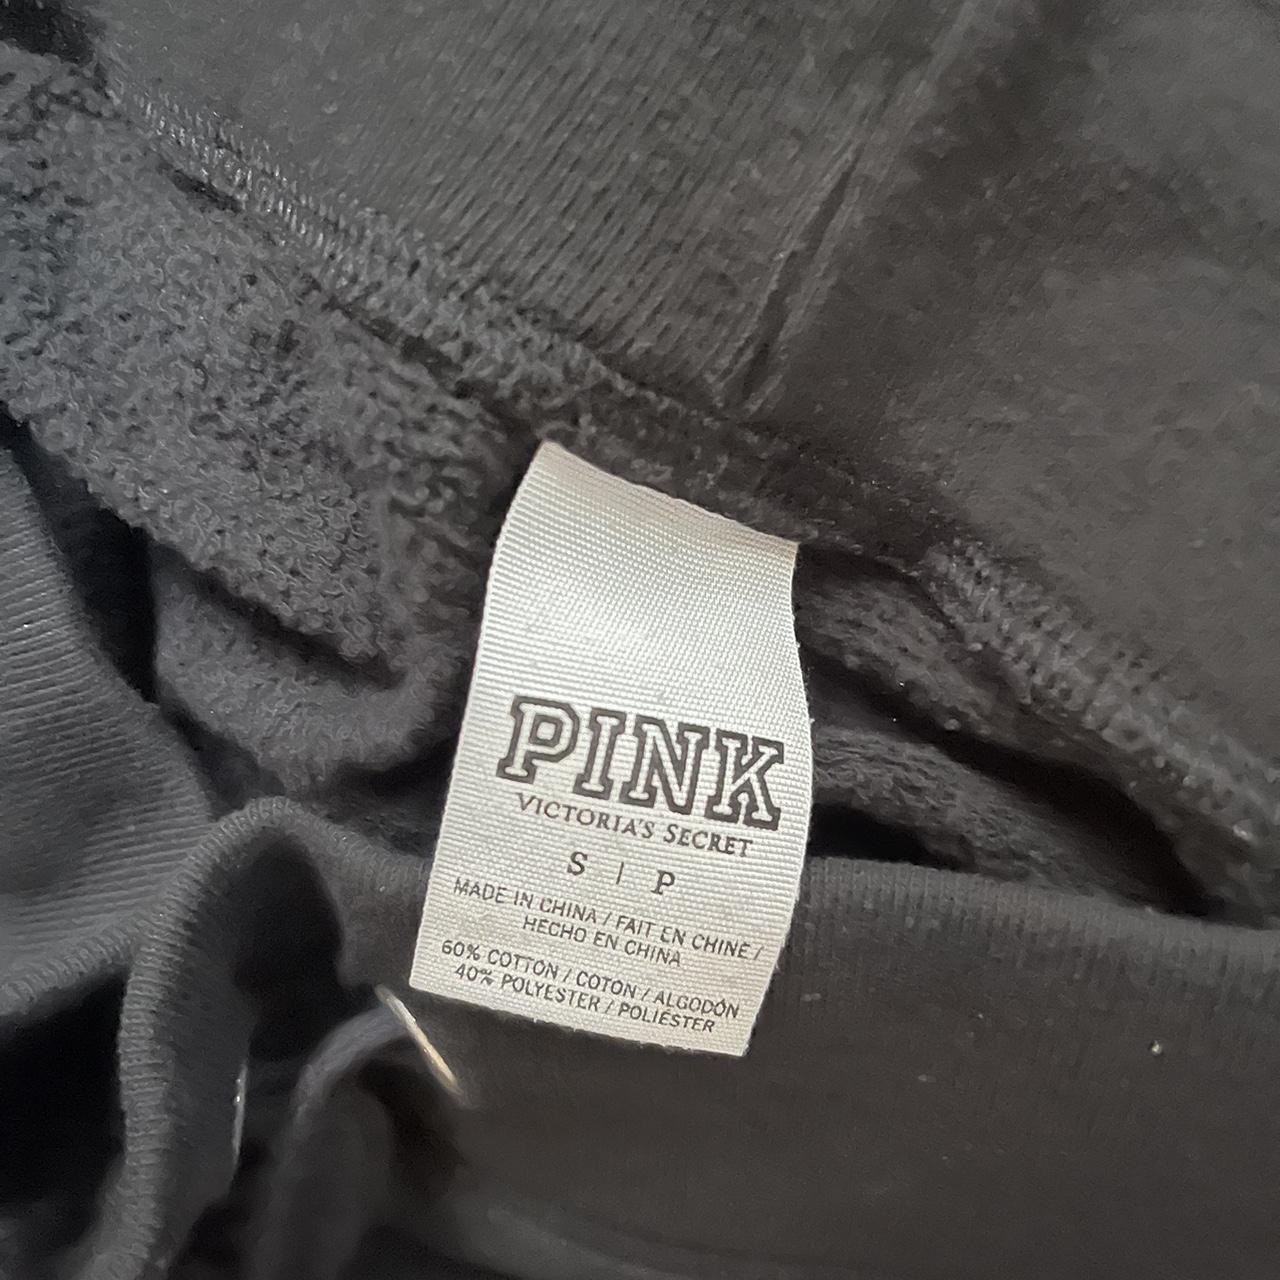 Victoria’s secret PINK sweatpants with stud design